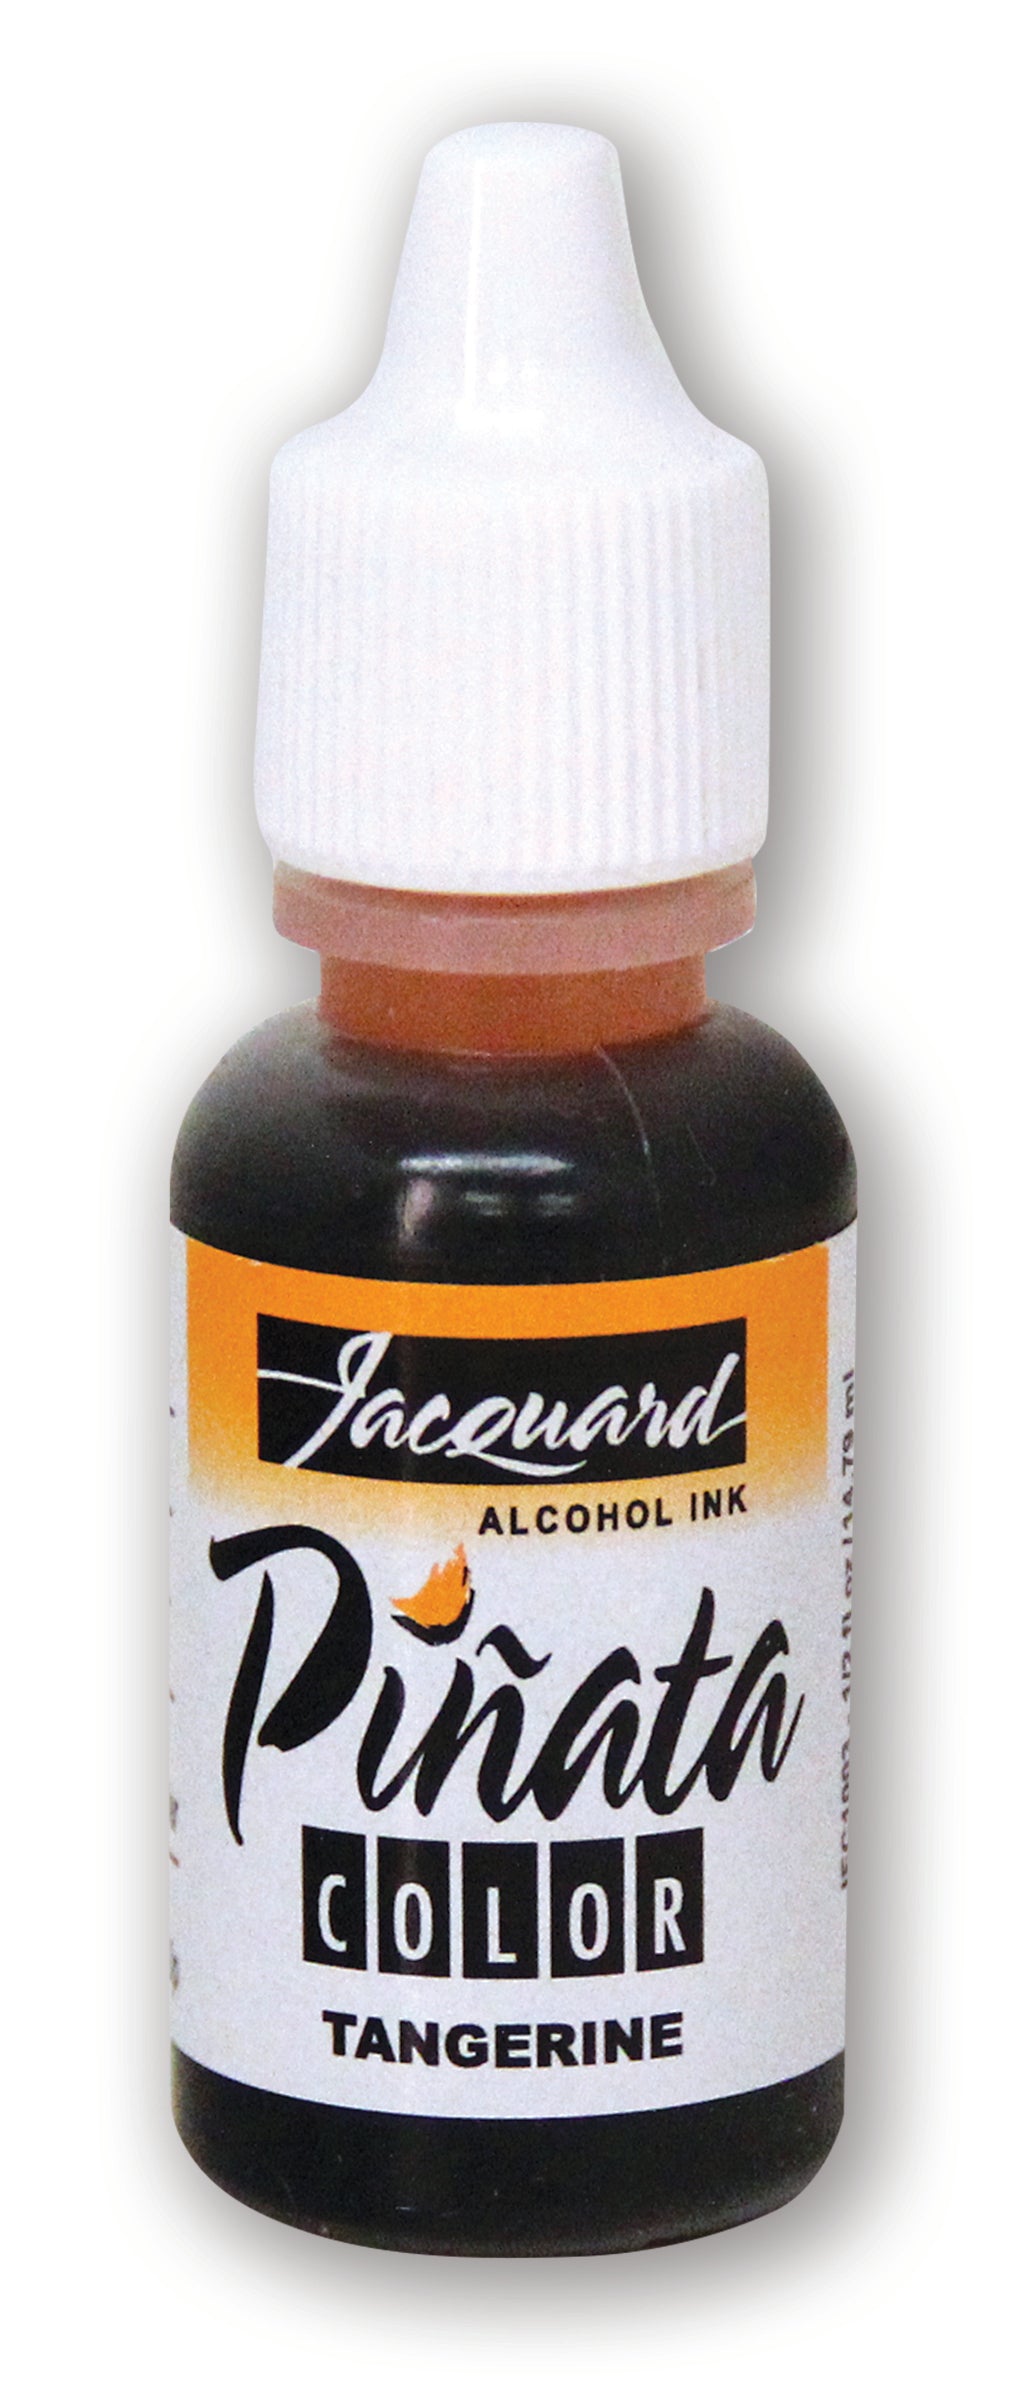 Jacquard Pinata Alcohol Ink 14ml (1/2oz) - Tangerine